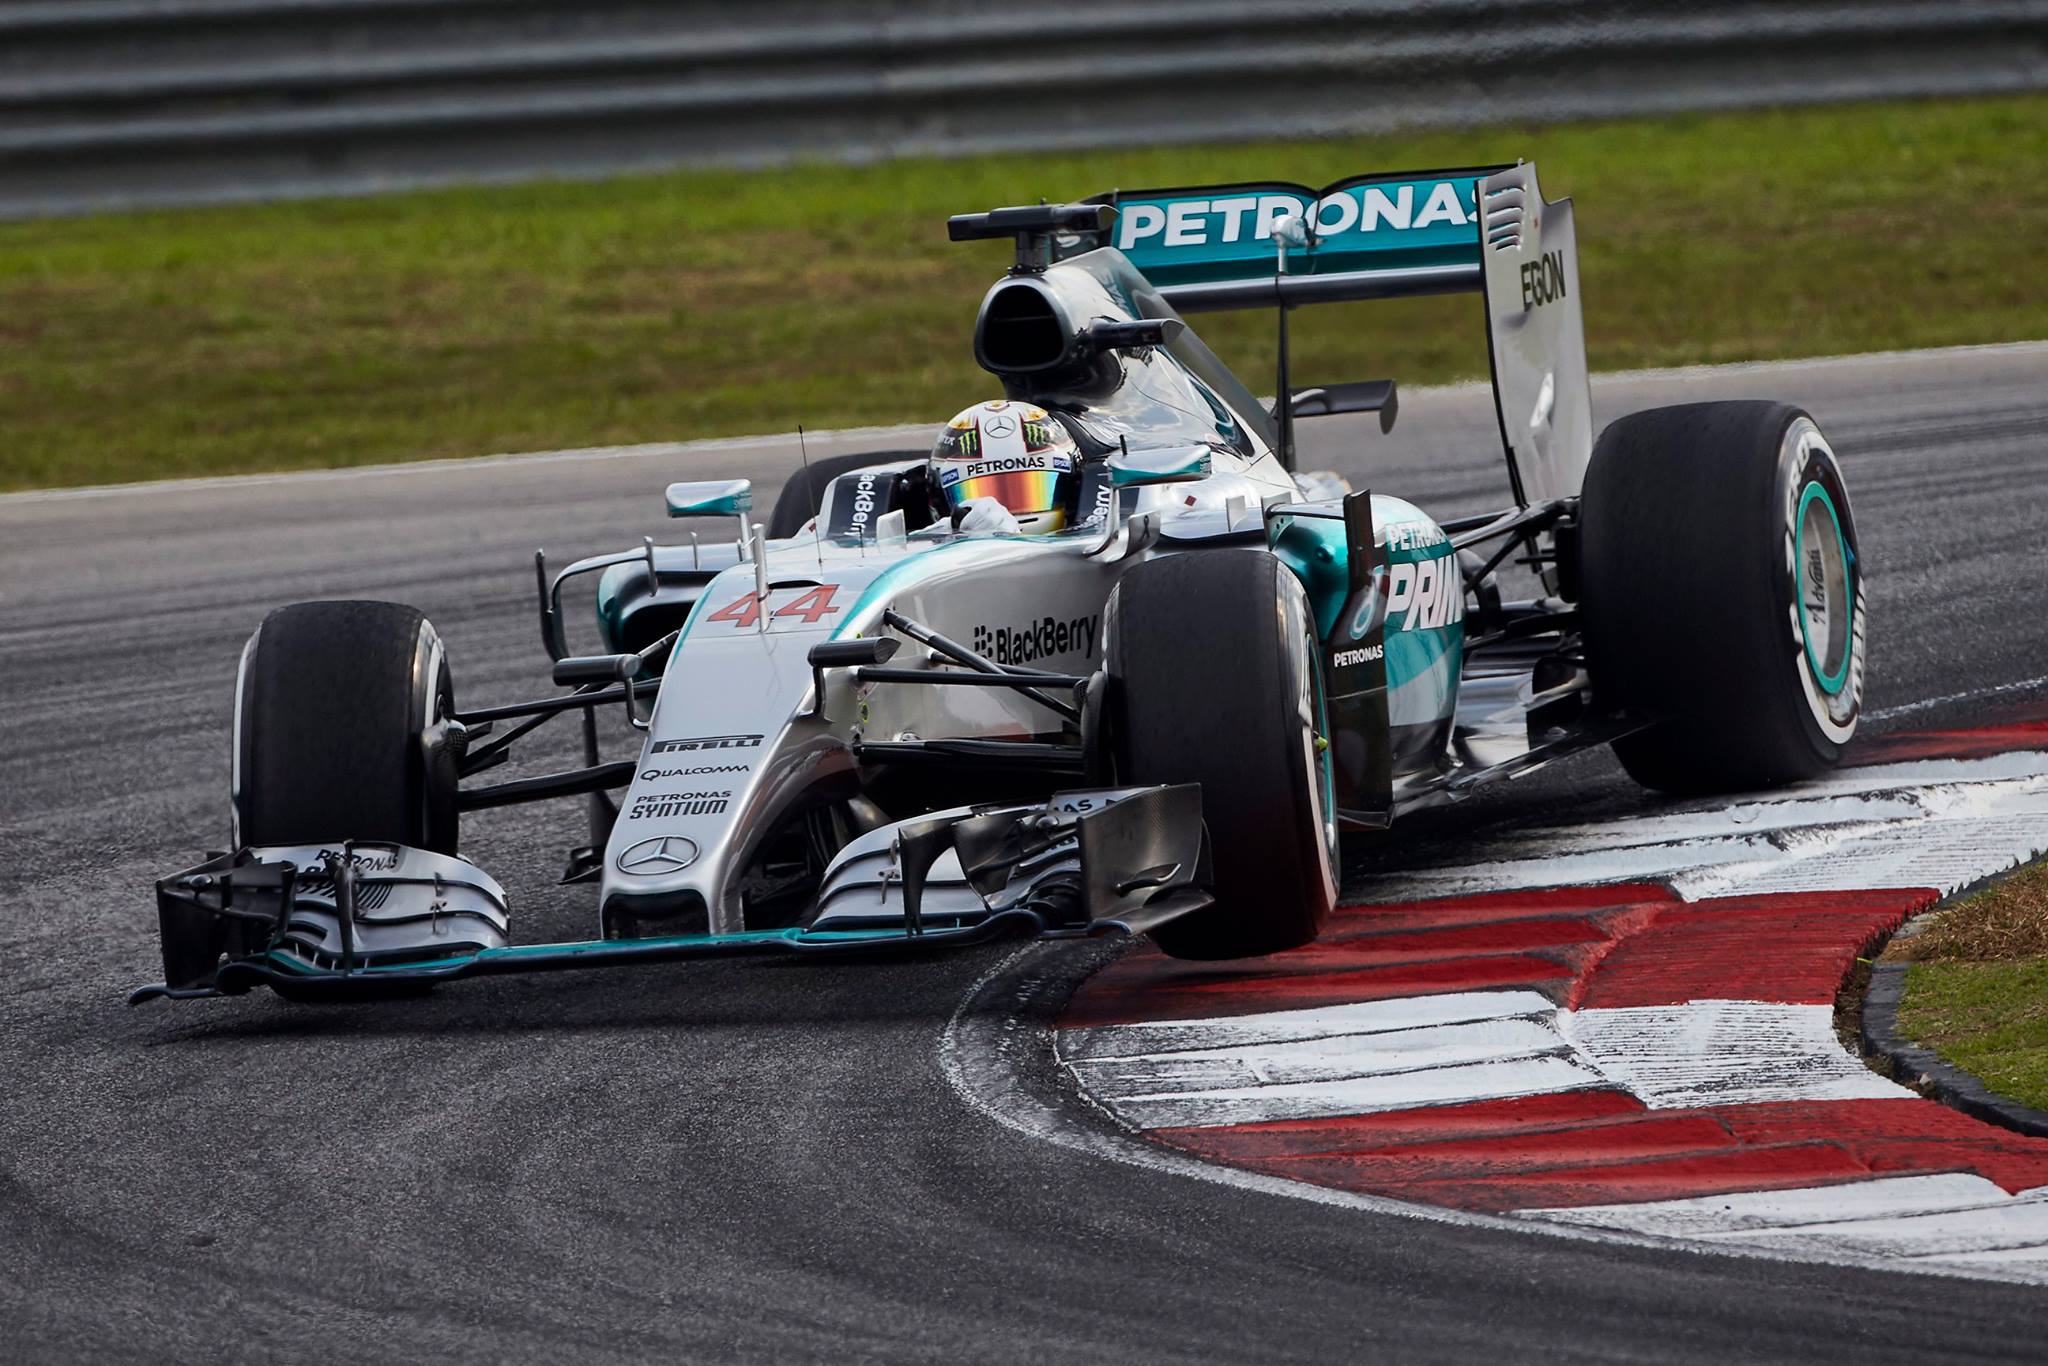 Mercedes at the F1 Malaysian Grand Prix - Image credit: Mercedes AMG F1